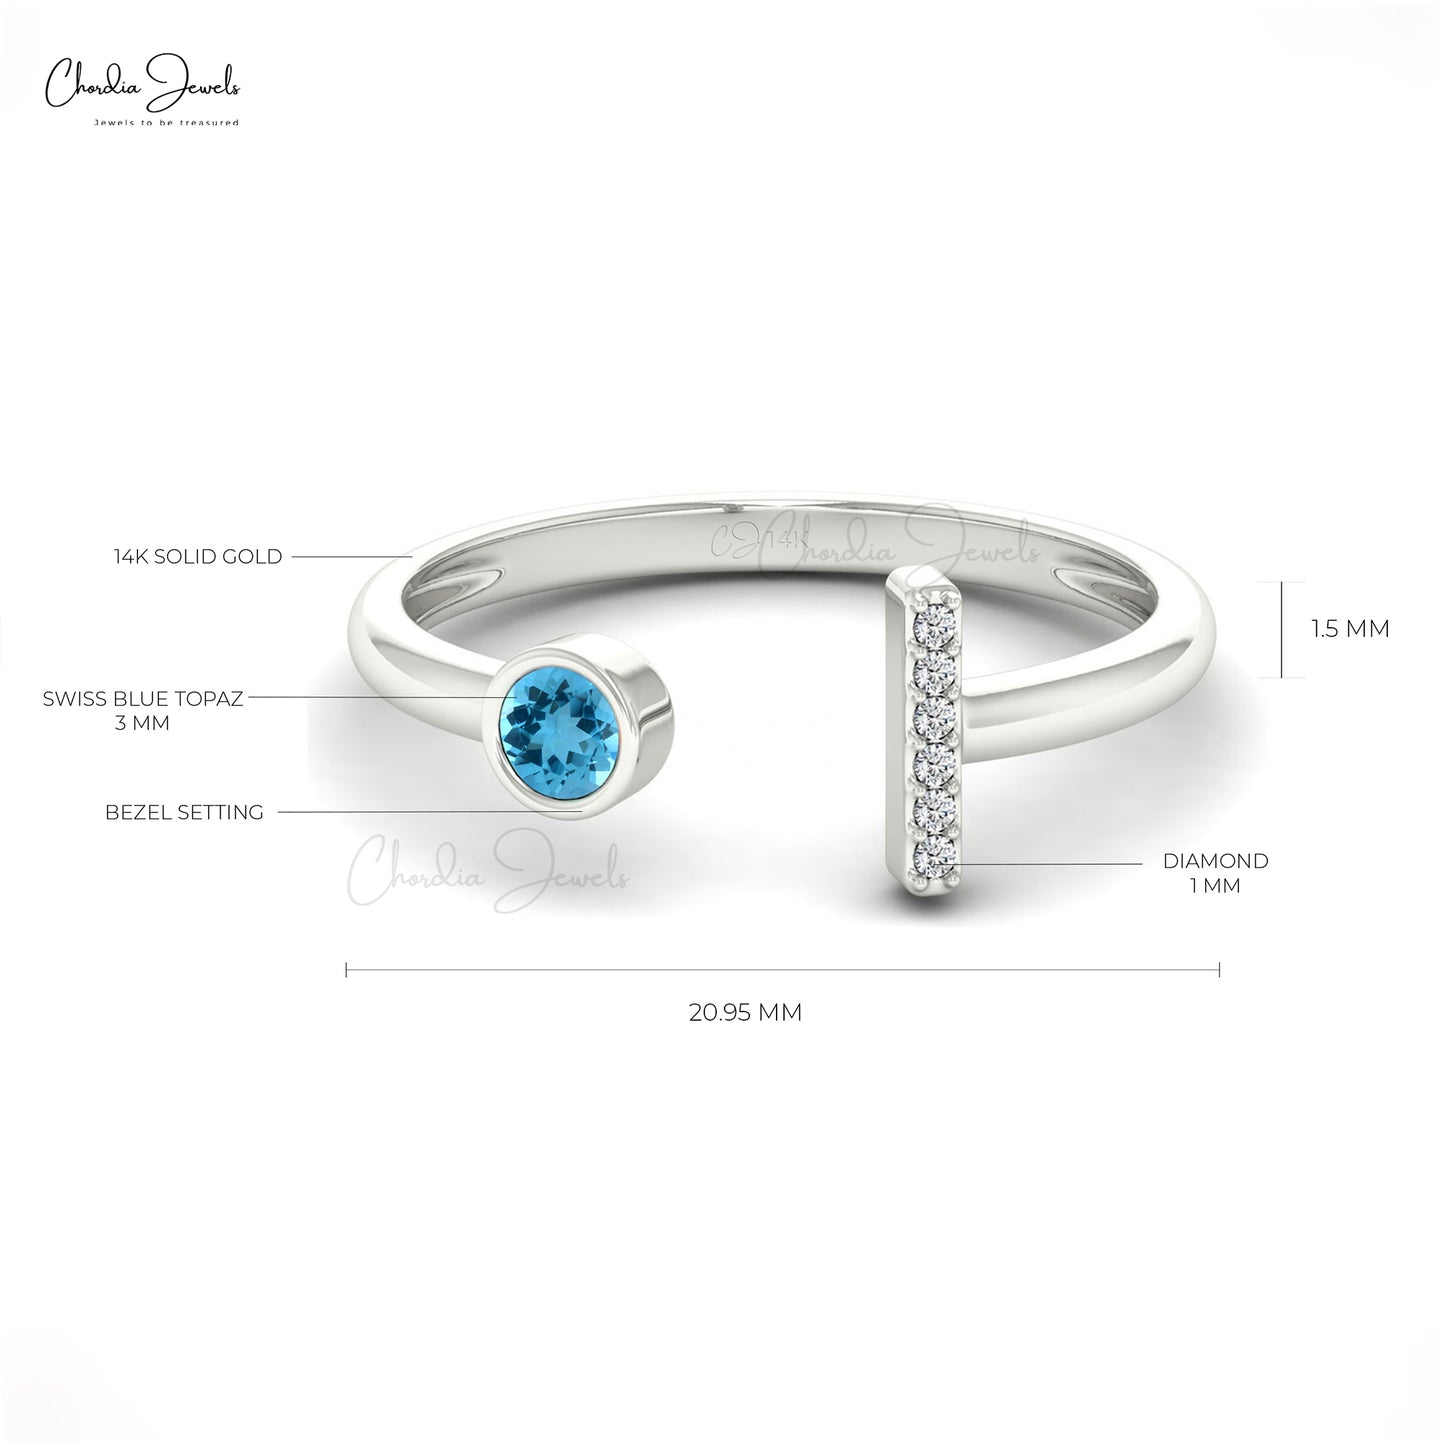 Natural Swiss Blue Topaz Diamond Ring 14k Solid Gold Split Shank Ring 3mm Round Cut Gemstone Ring For Anniversary Gift